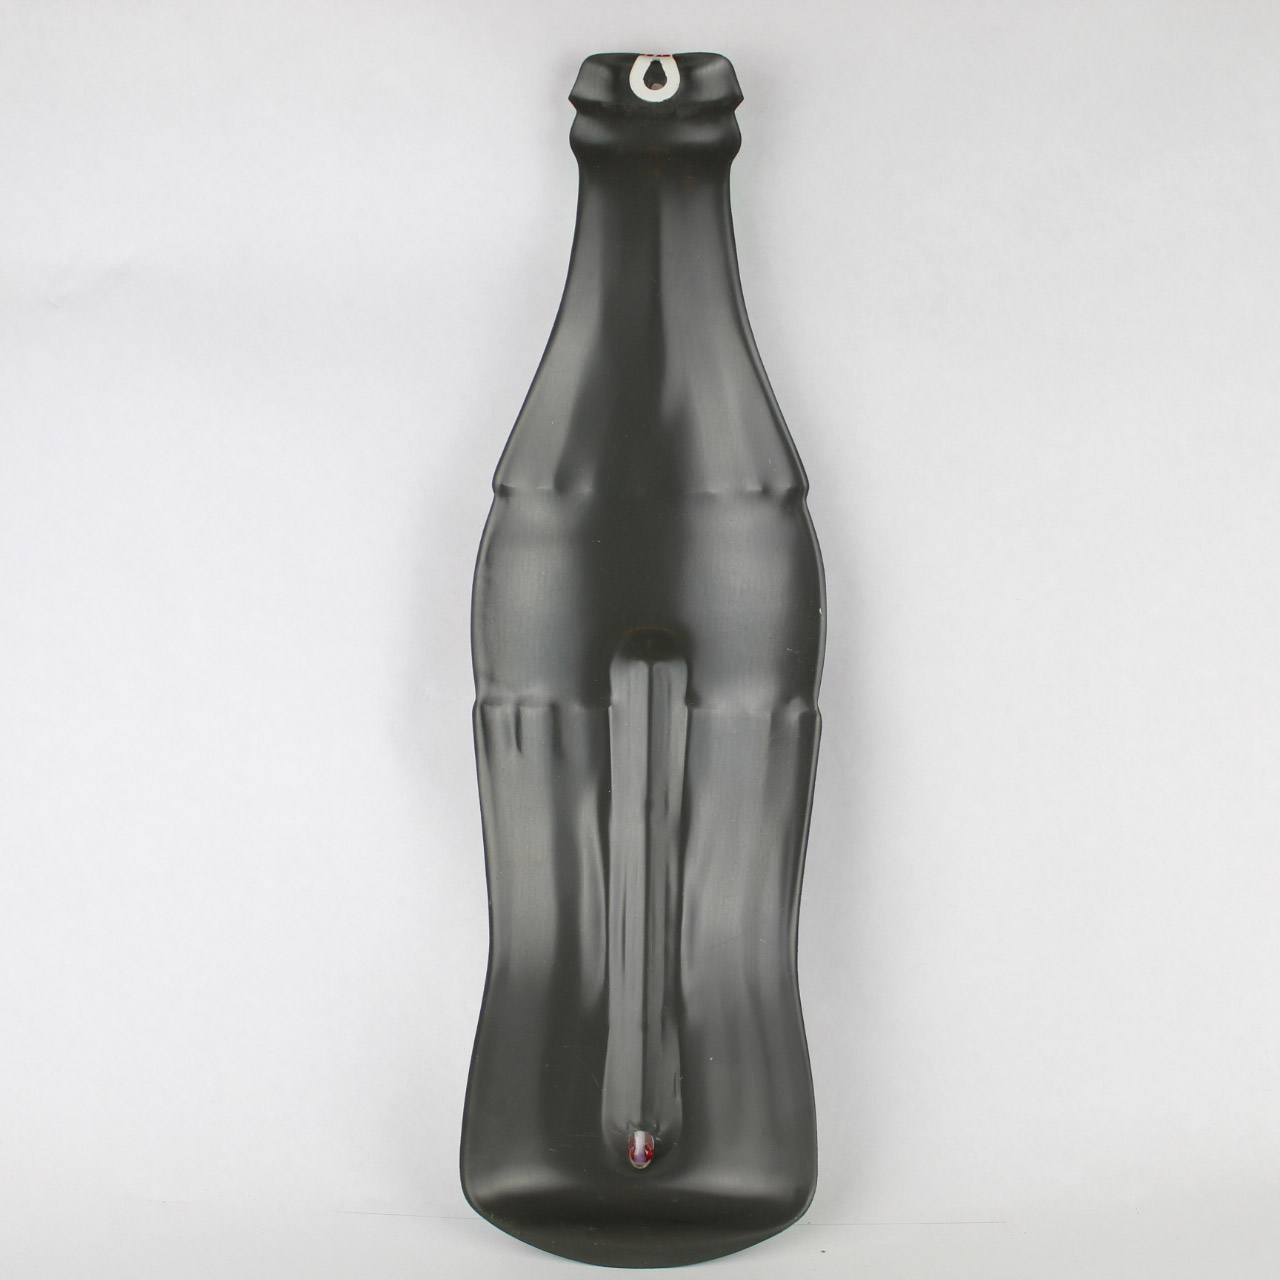 https://displayshack.com/wp-content/uploads/2021/04/Retro-Tin-Sign-Coca-Cola-Bottle-Thermometer-back.jpg